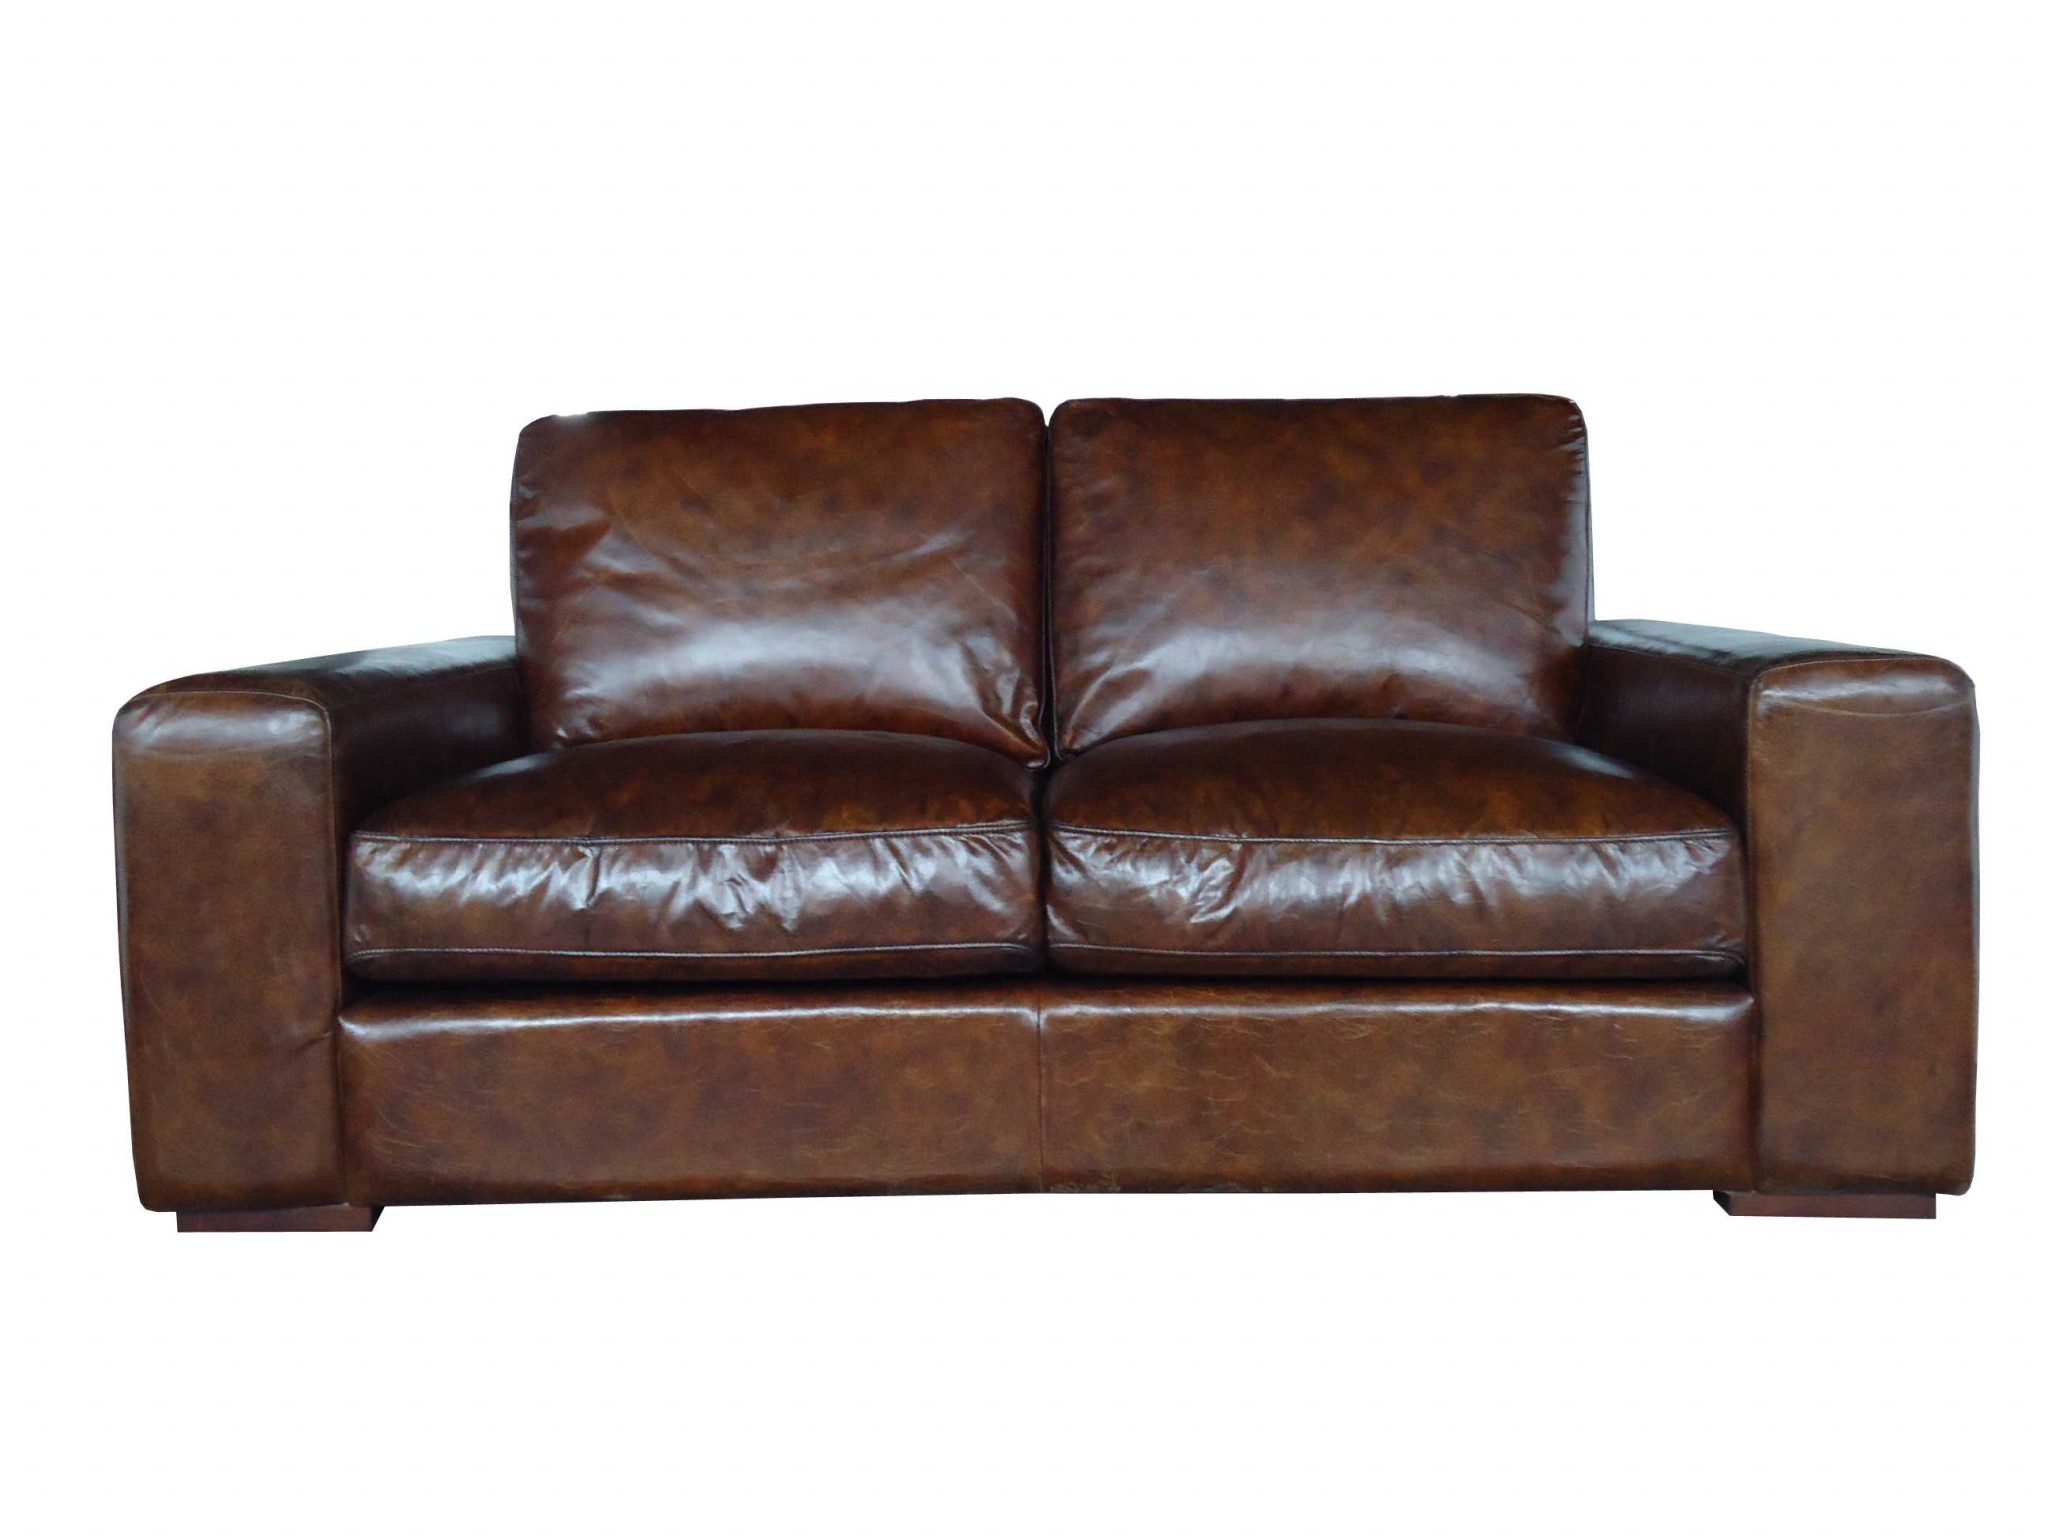 42" X 72" X 34" Brown Full Leather Sofa 2 Seater